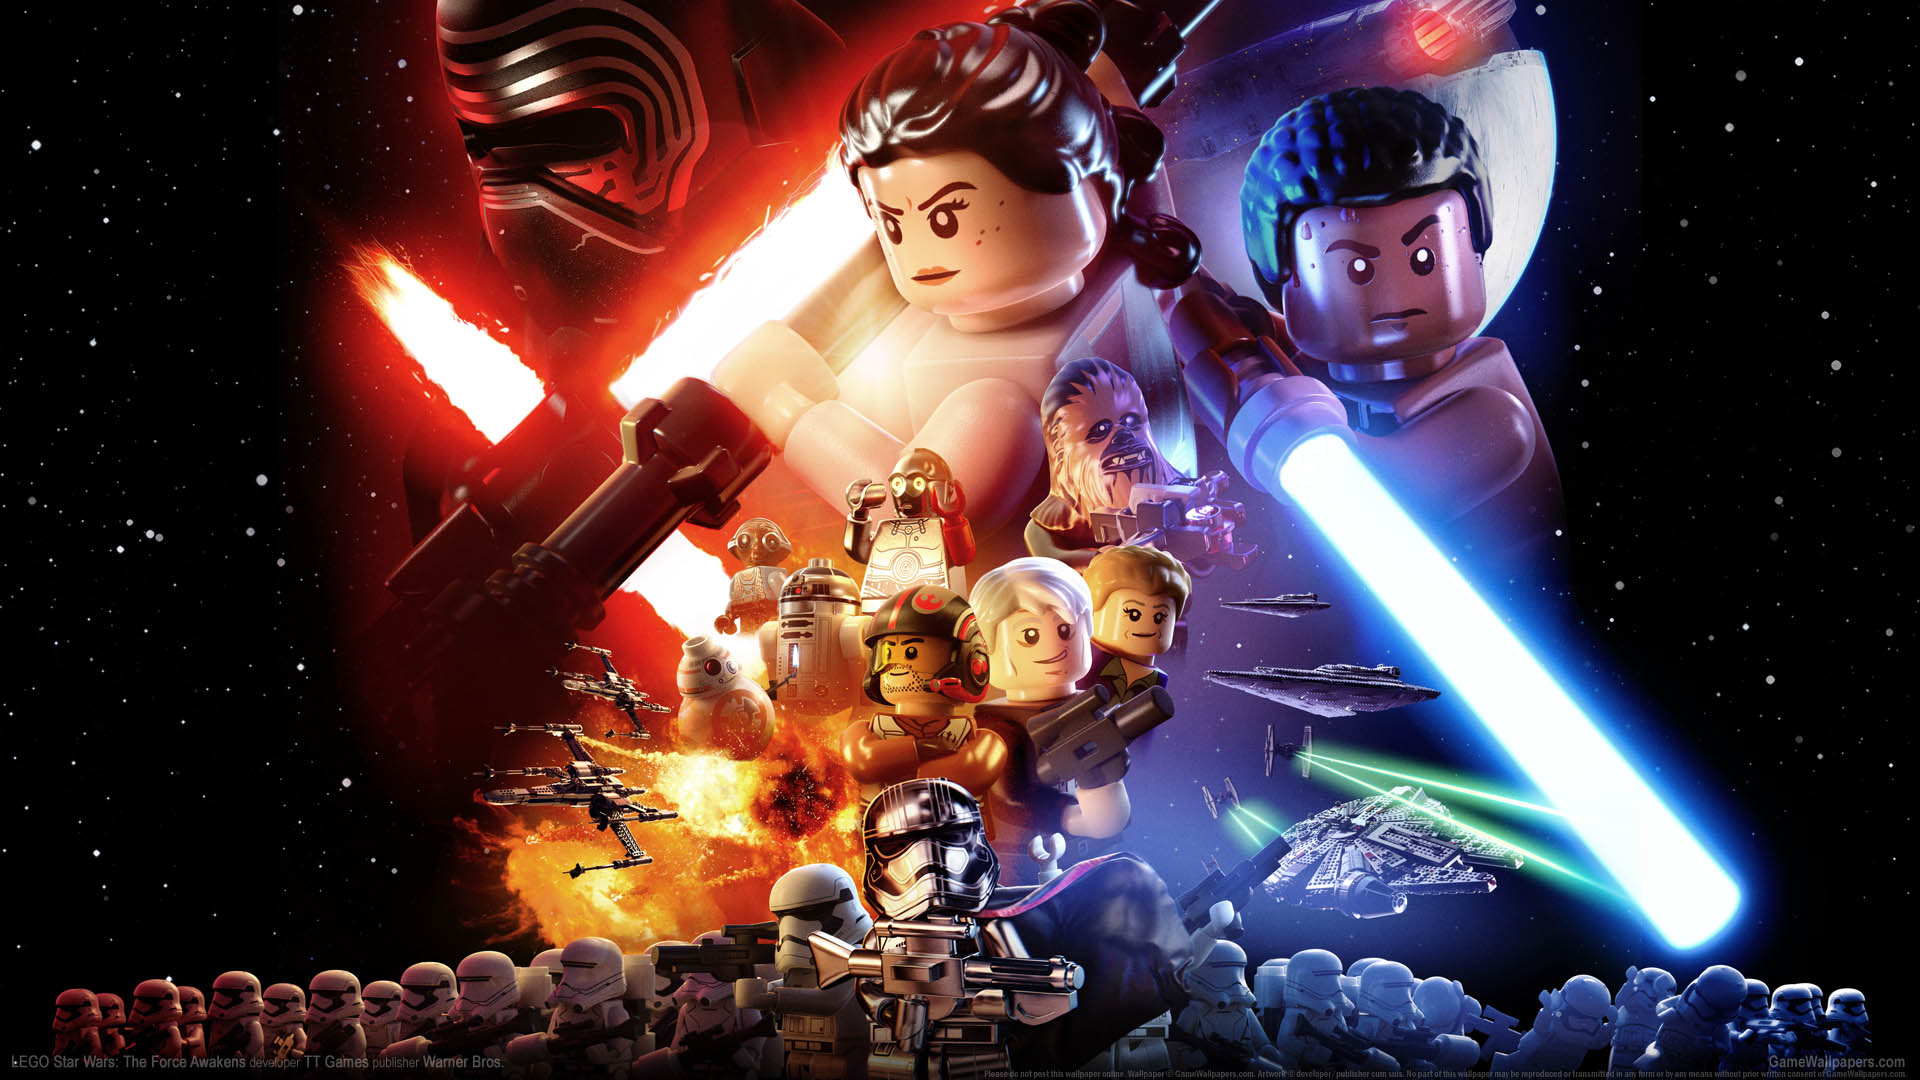 LEGO Star Wars: The Force Awakens wallpaper 01 1920x1080